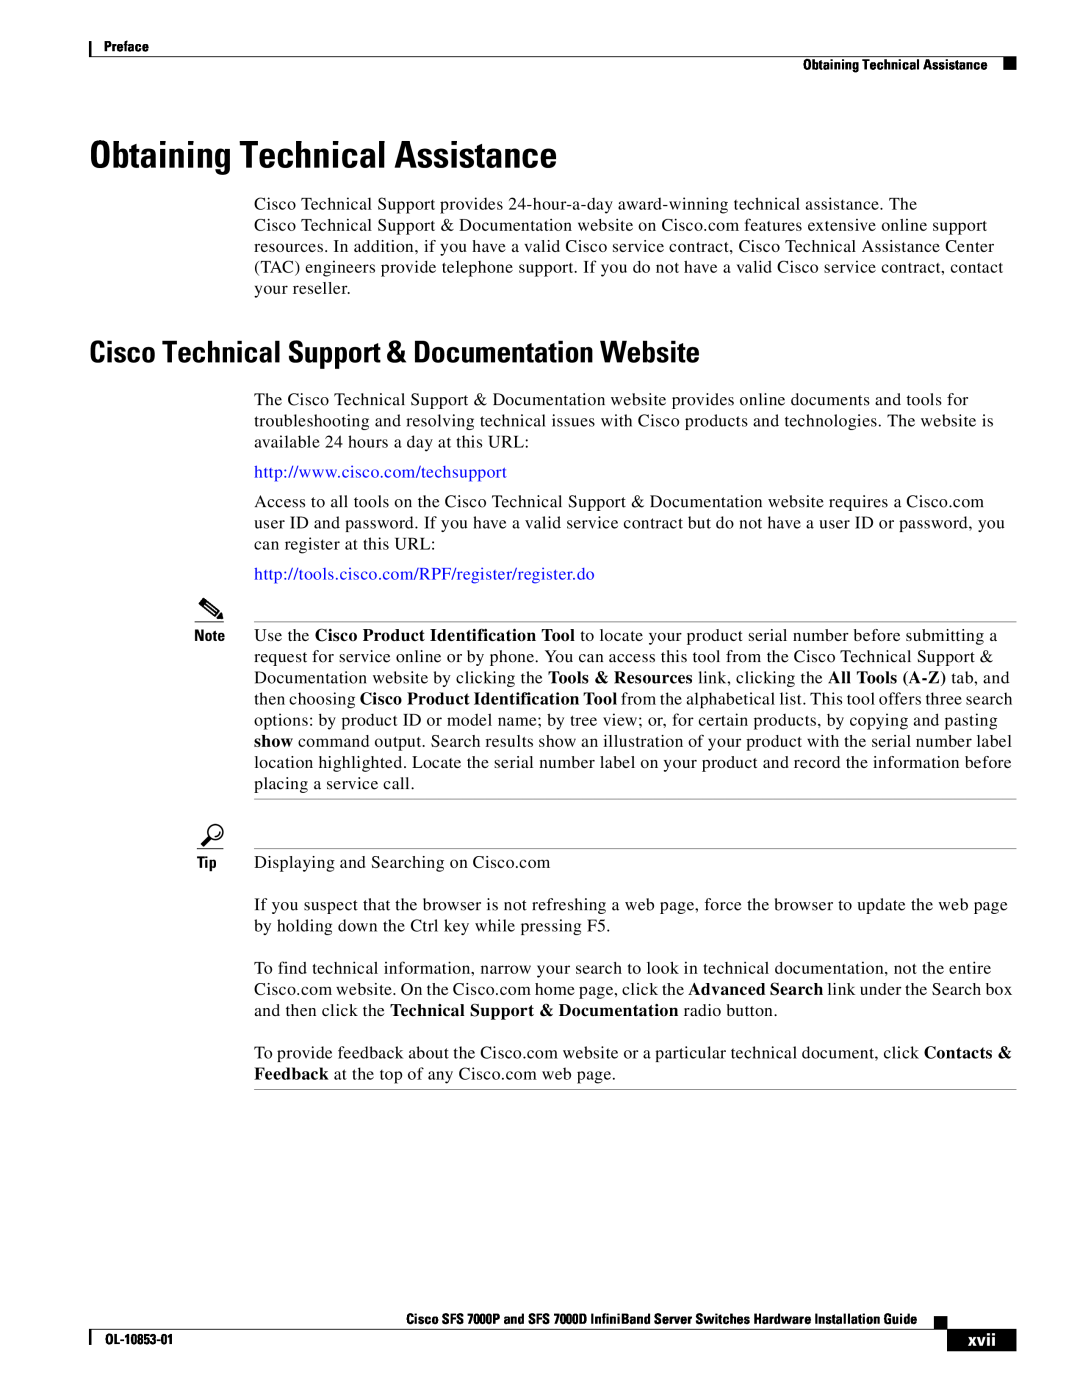 Cisco Systems SFS 7000D, SFS 7000P Obtaining Technical Assistance, Cisco Technical Support & Documentation Website, xvii 